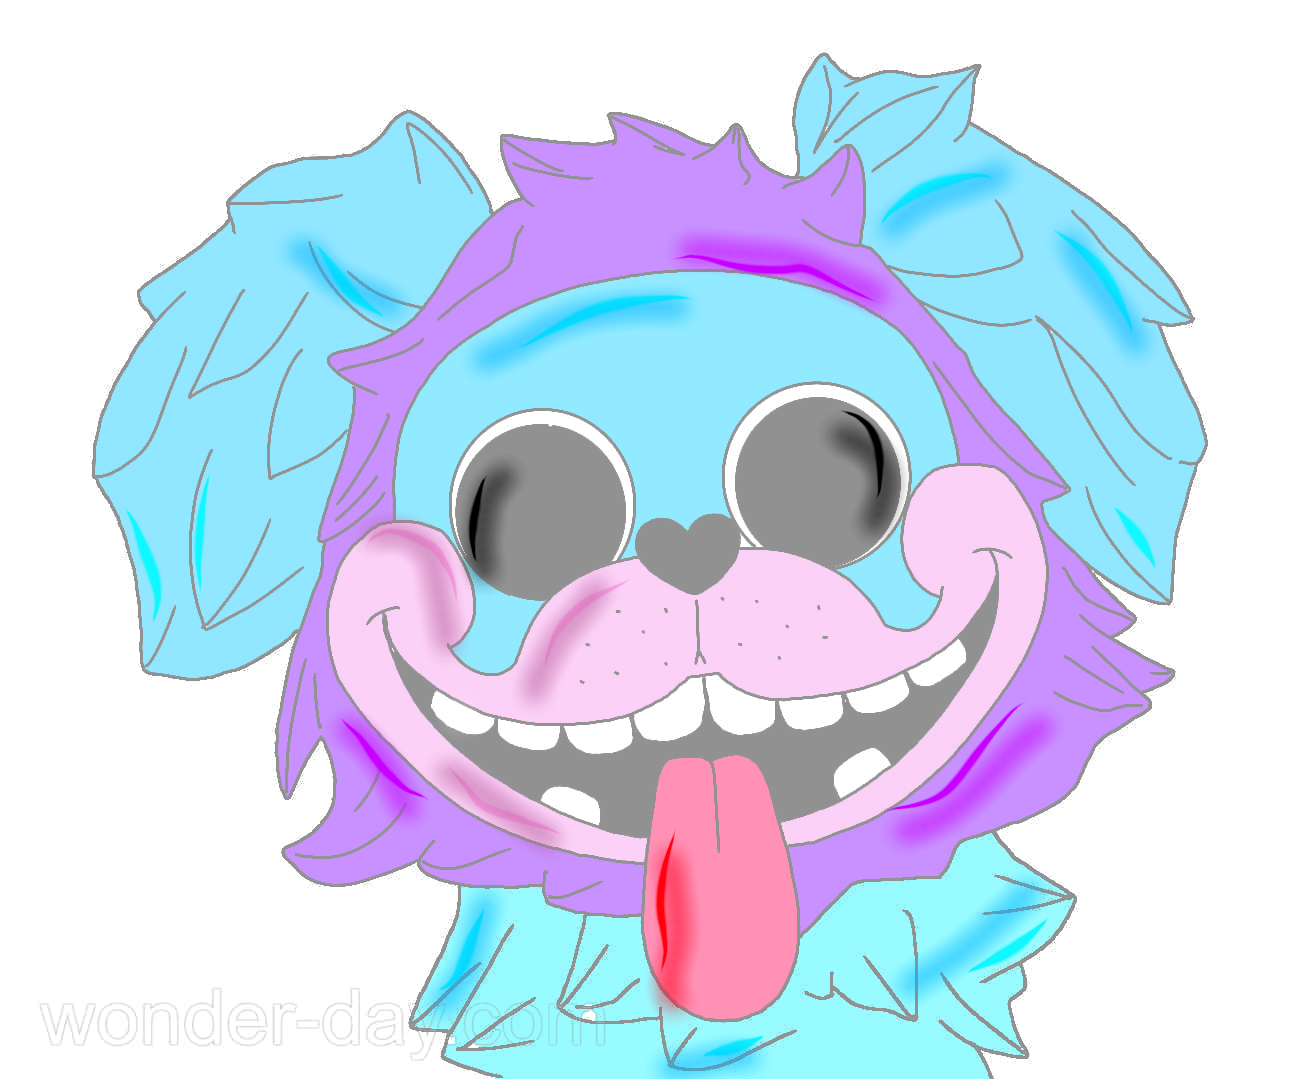 Poppy Playtime Commission - Jussy + PJ (Coloured) by HealerCharm on  DeviantArt